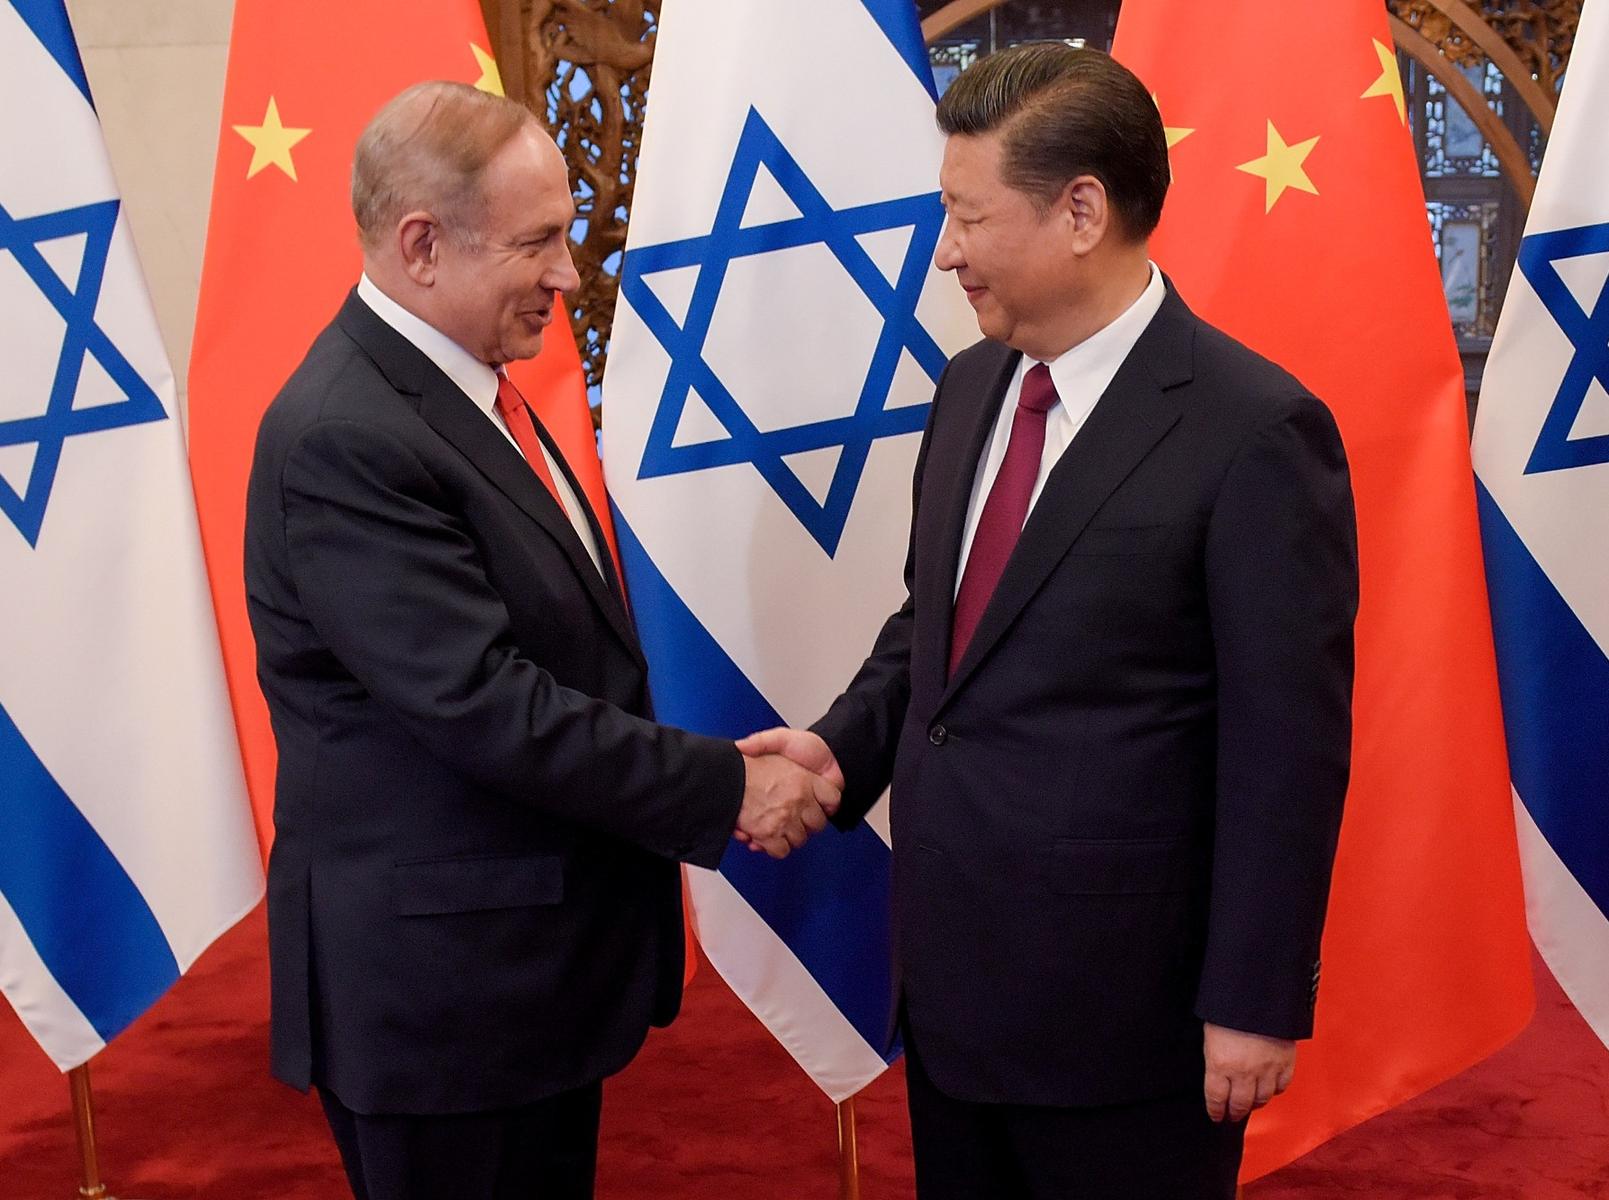 Xi Jinping with Prime Minister Benjamin Netanyahu of Israel